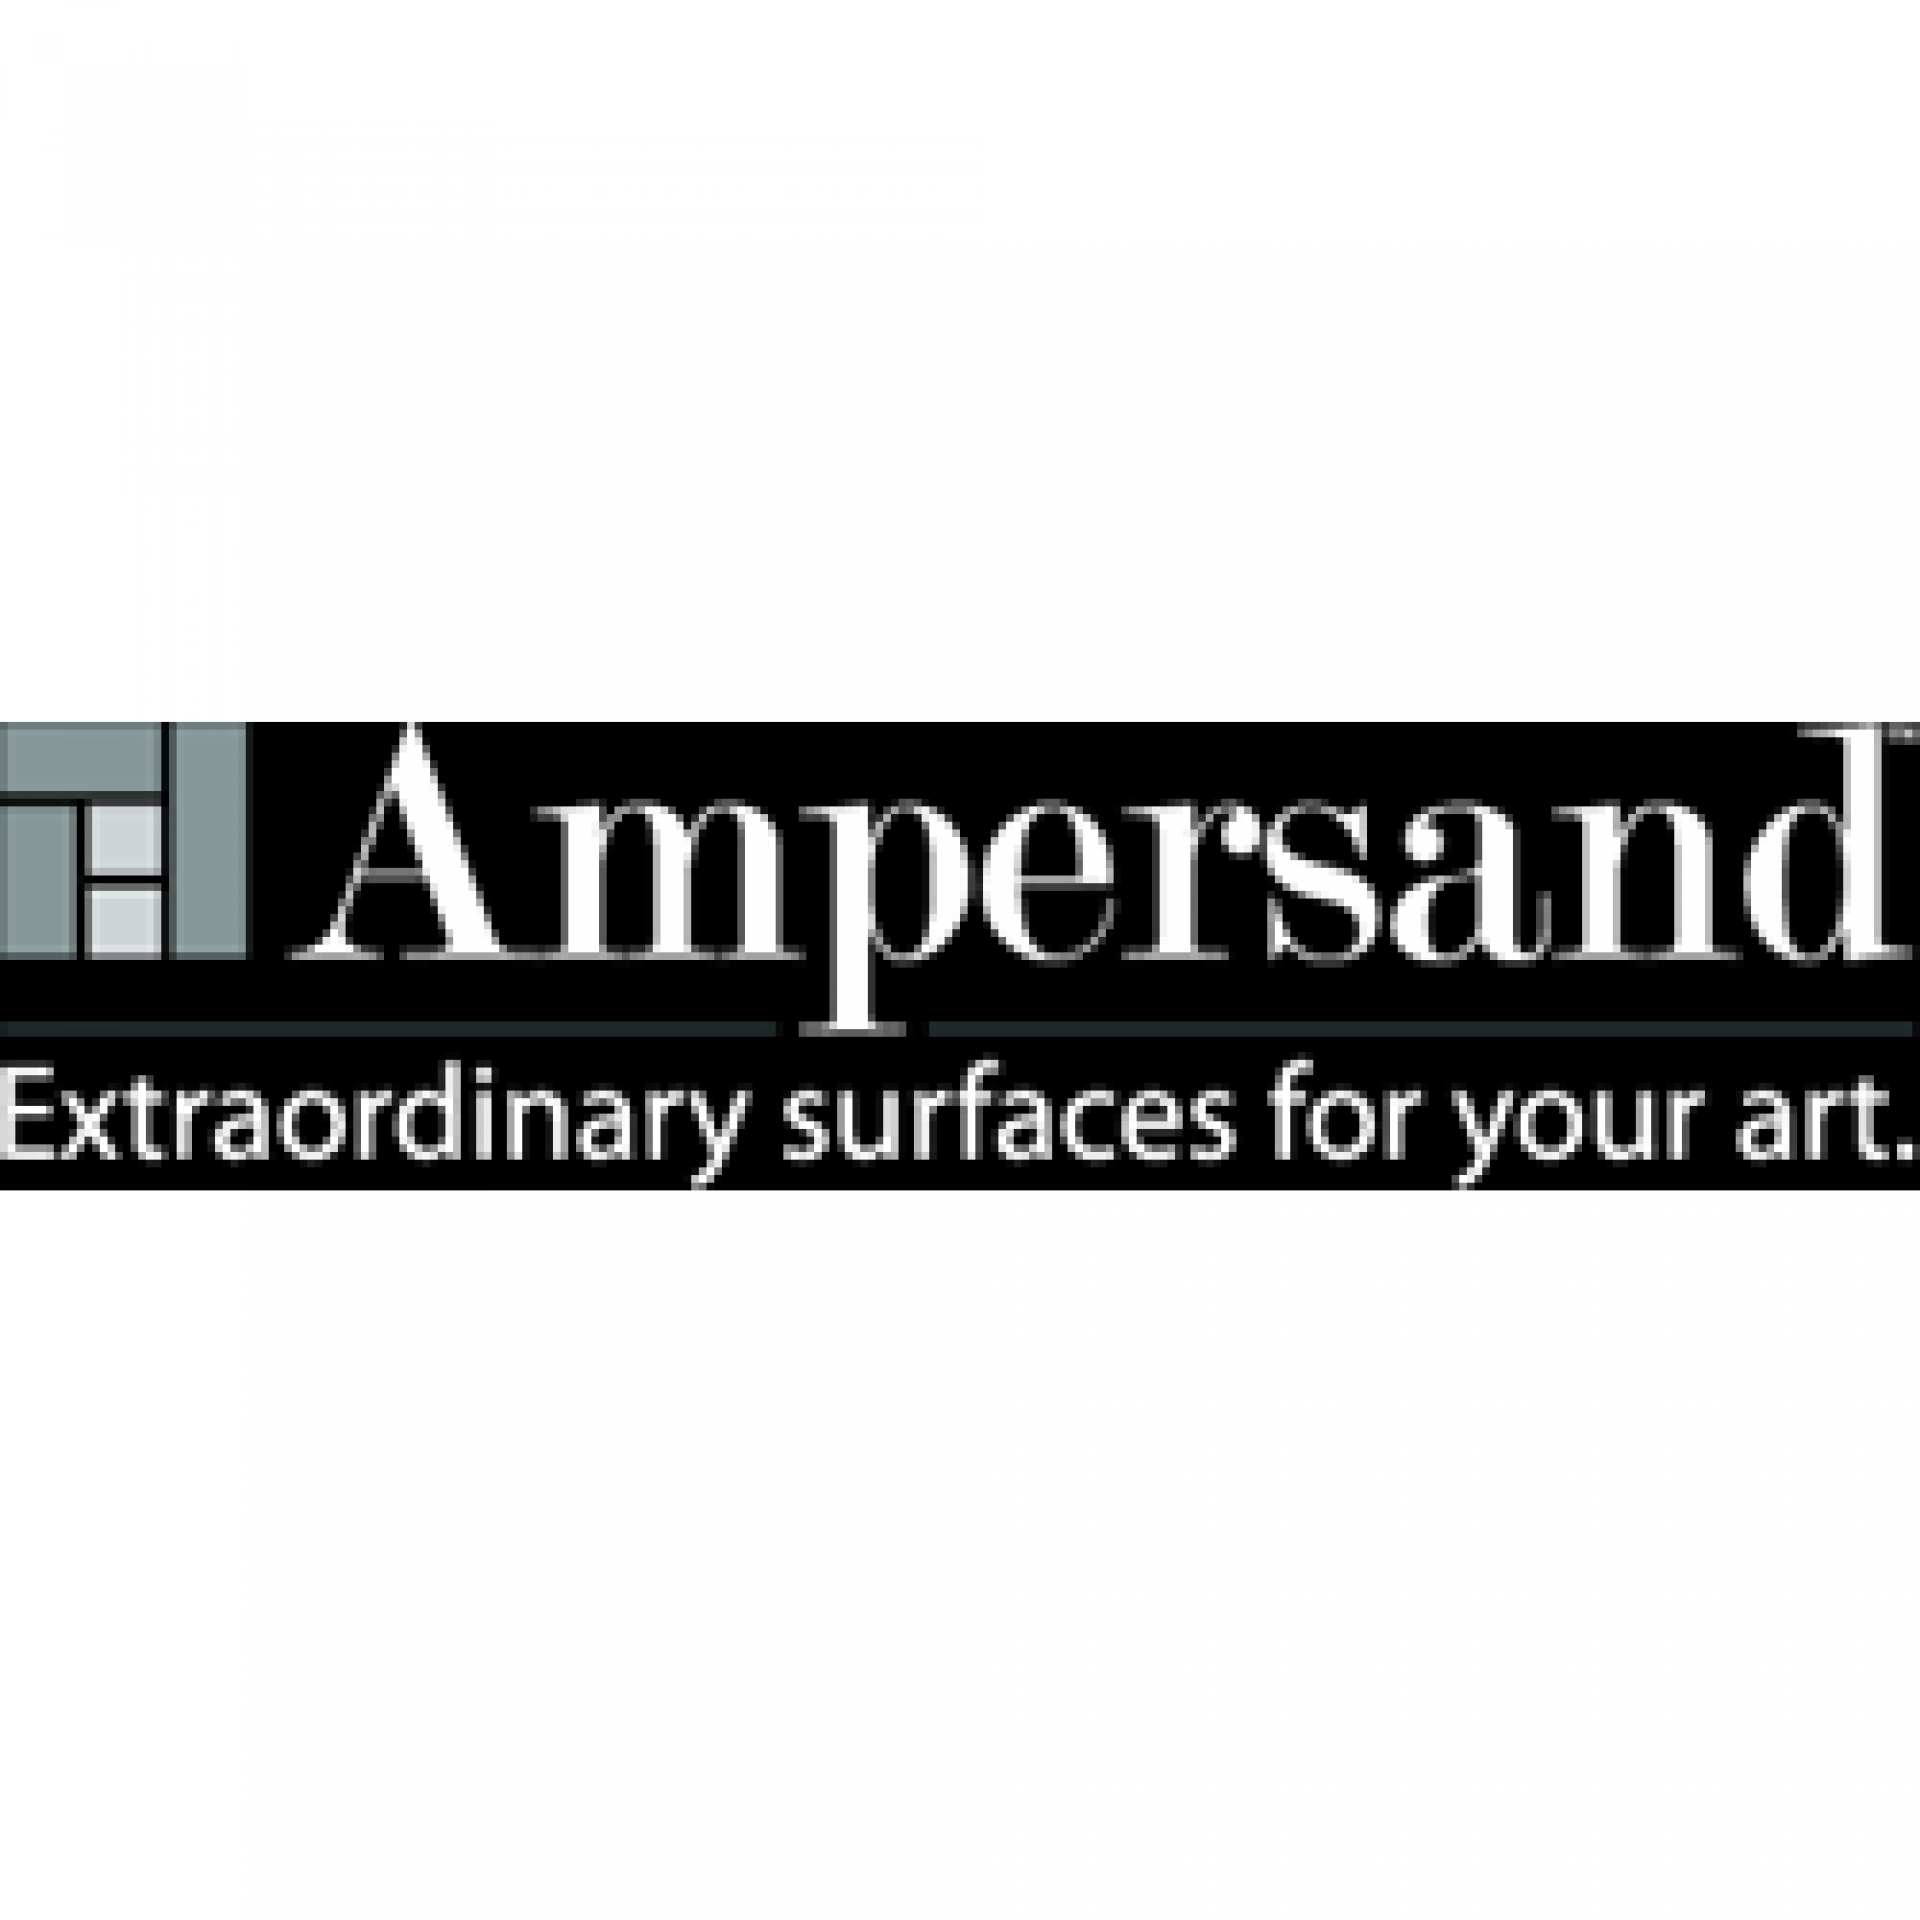 Ampersand